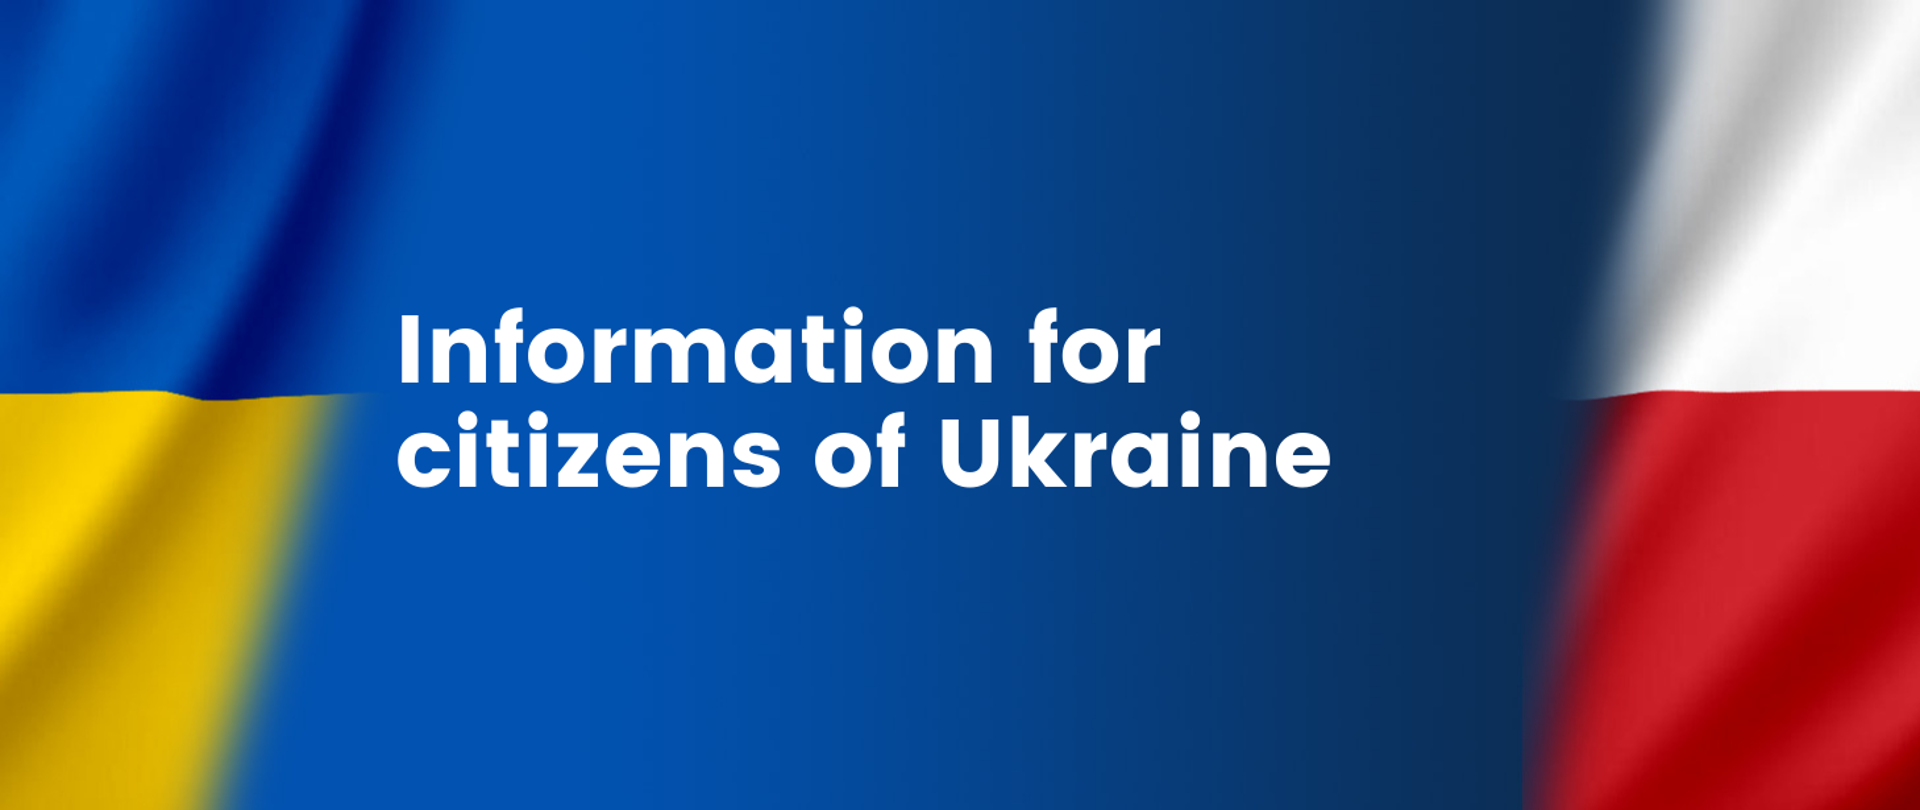 Information for citizens of Ukraine